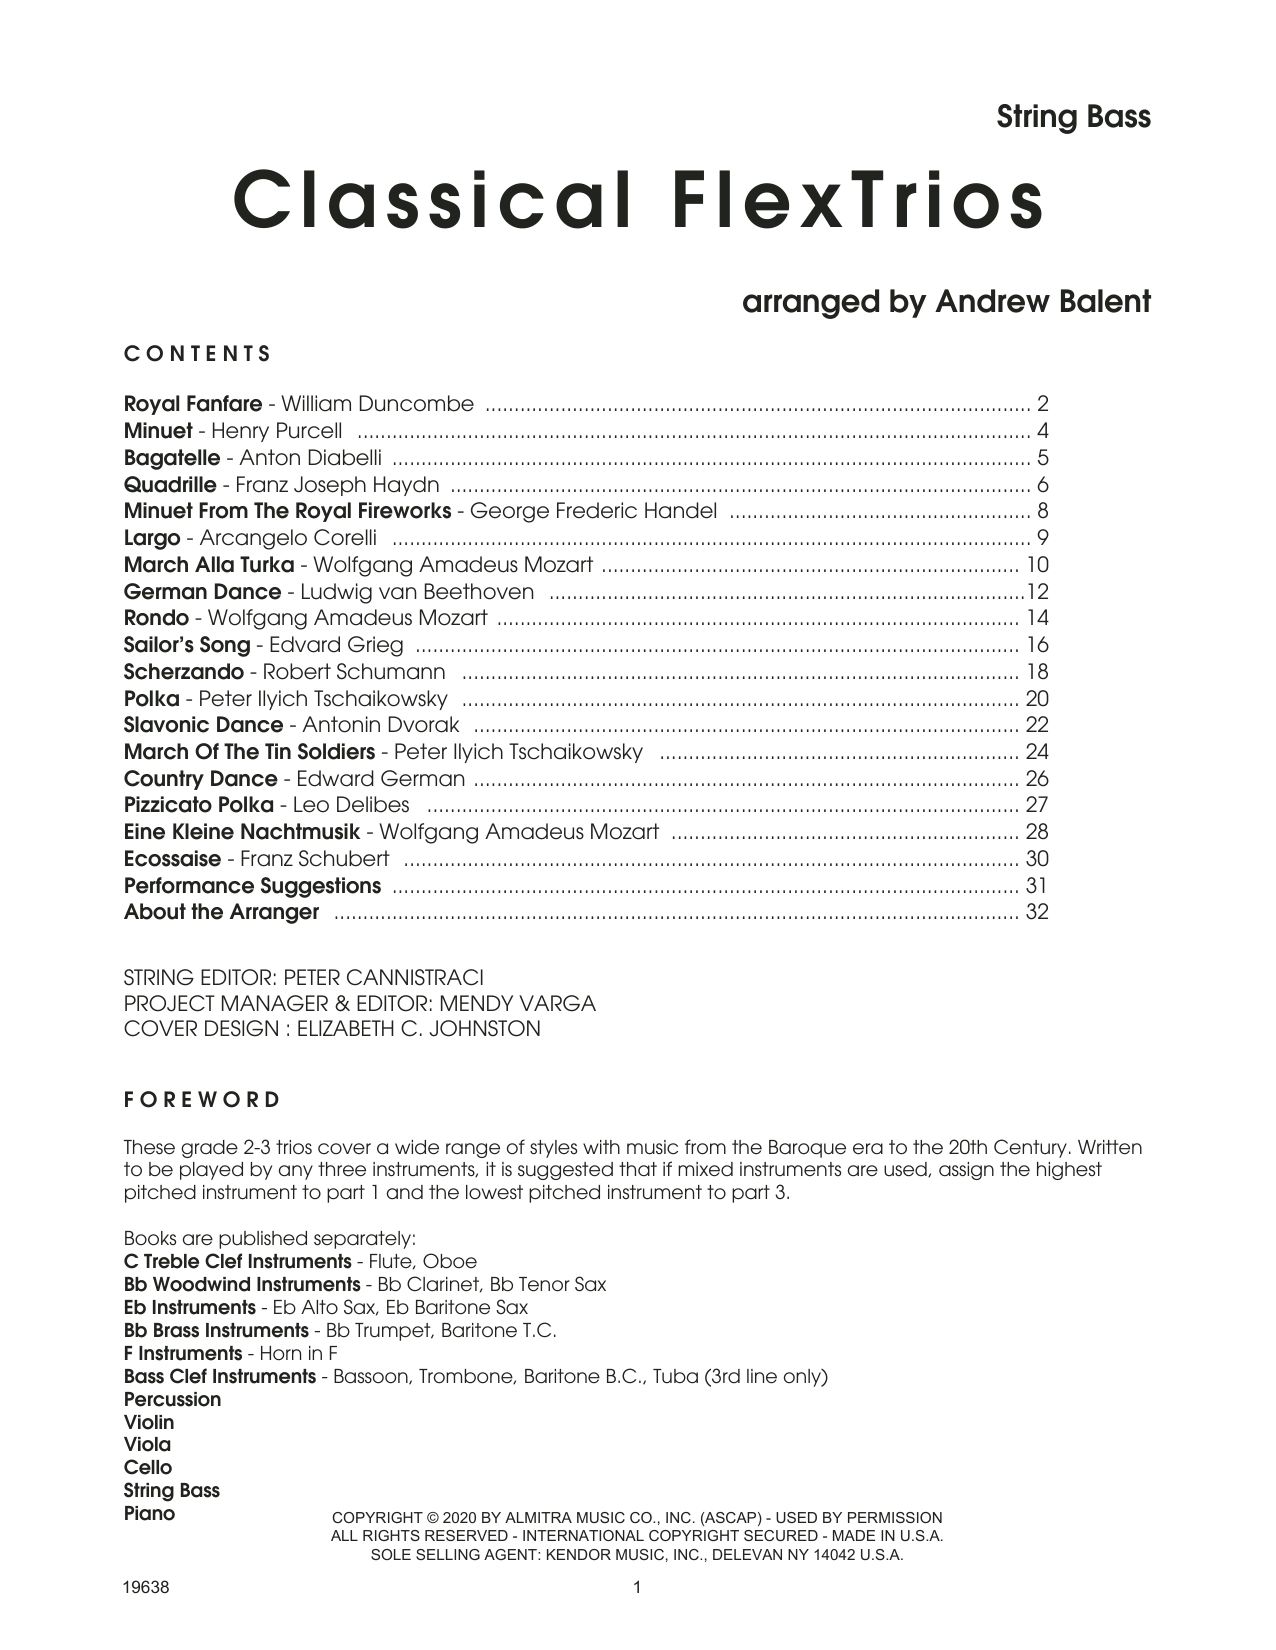 Download Various Classical Flextrios (arr. Andrew Balent Sheet Music